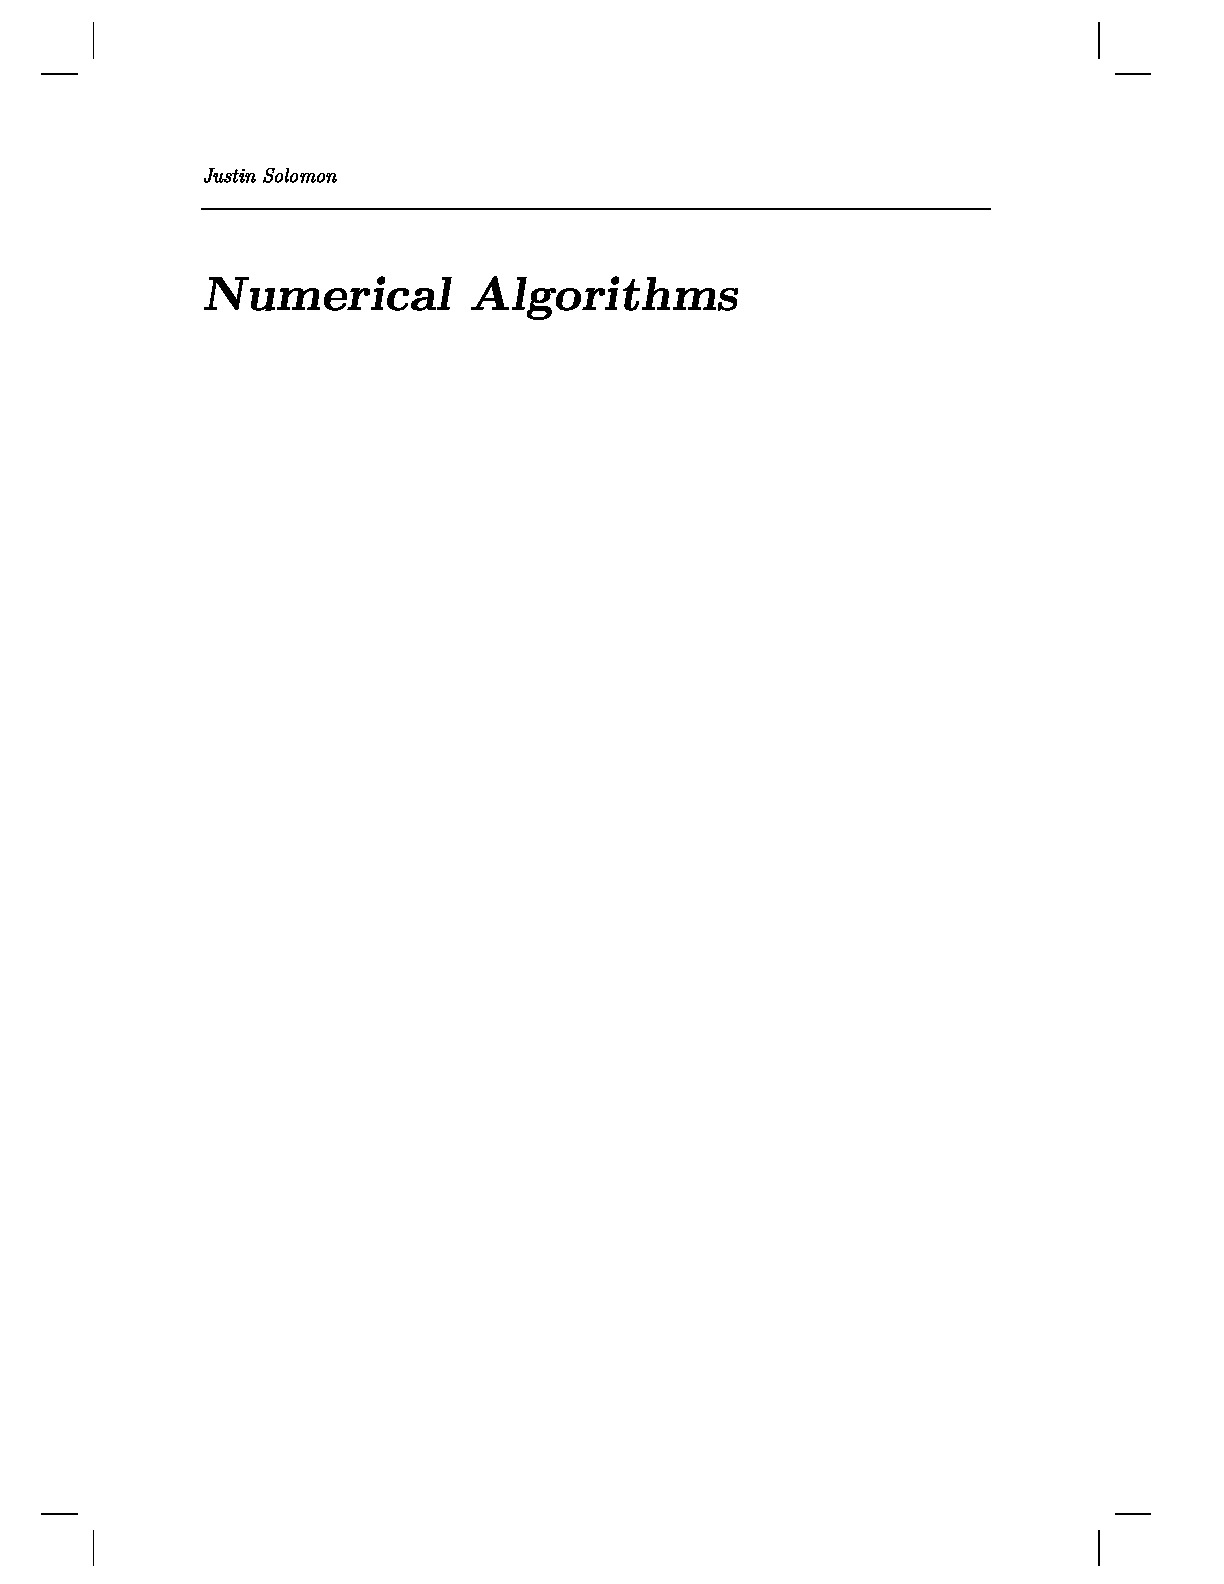 numerical-algorithms BY Justin Solomon